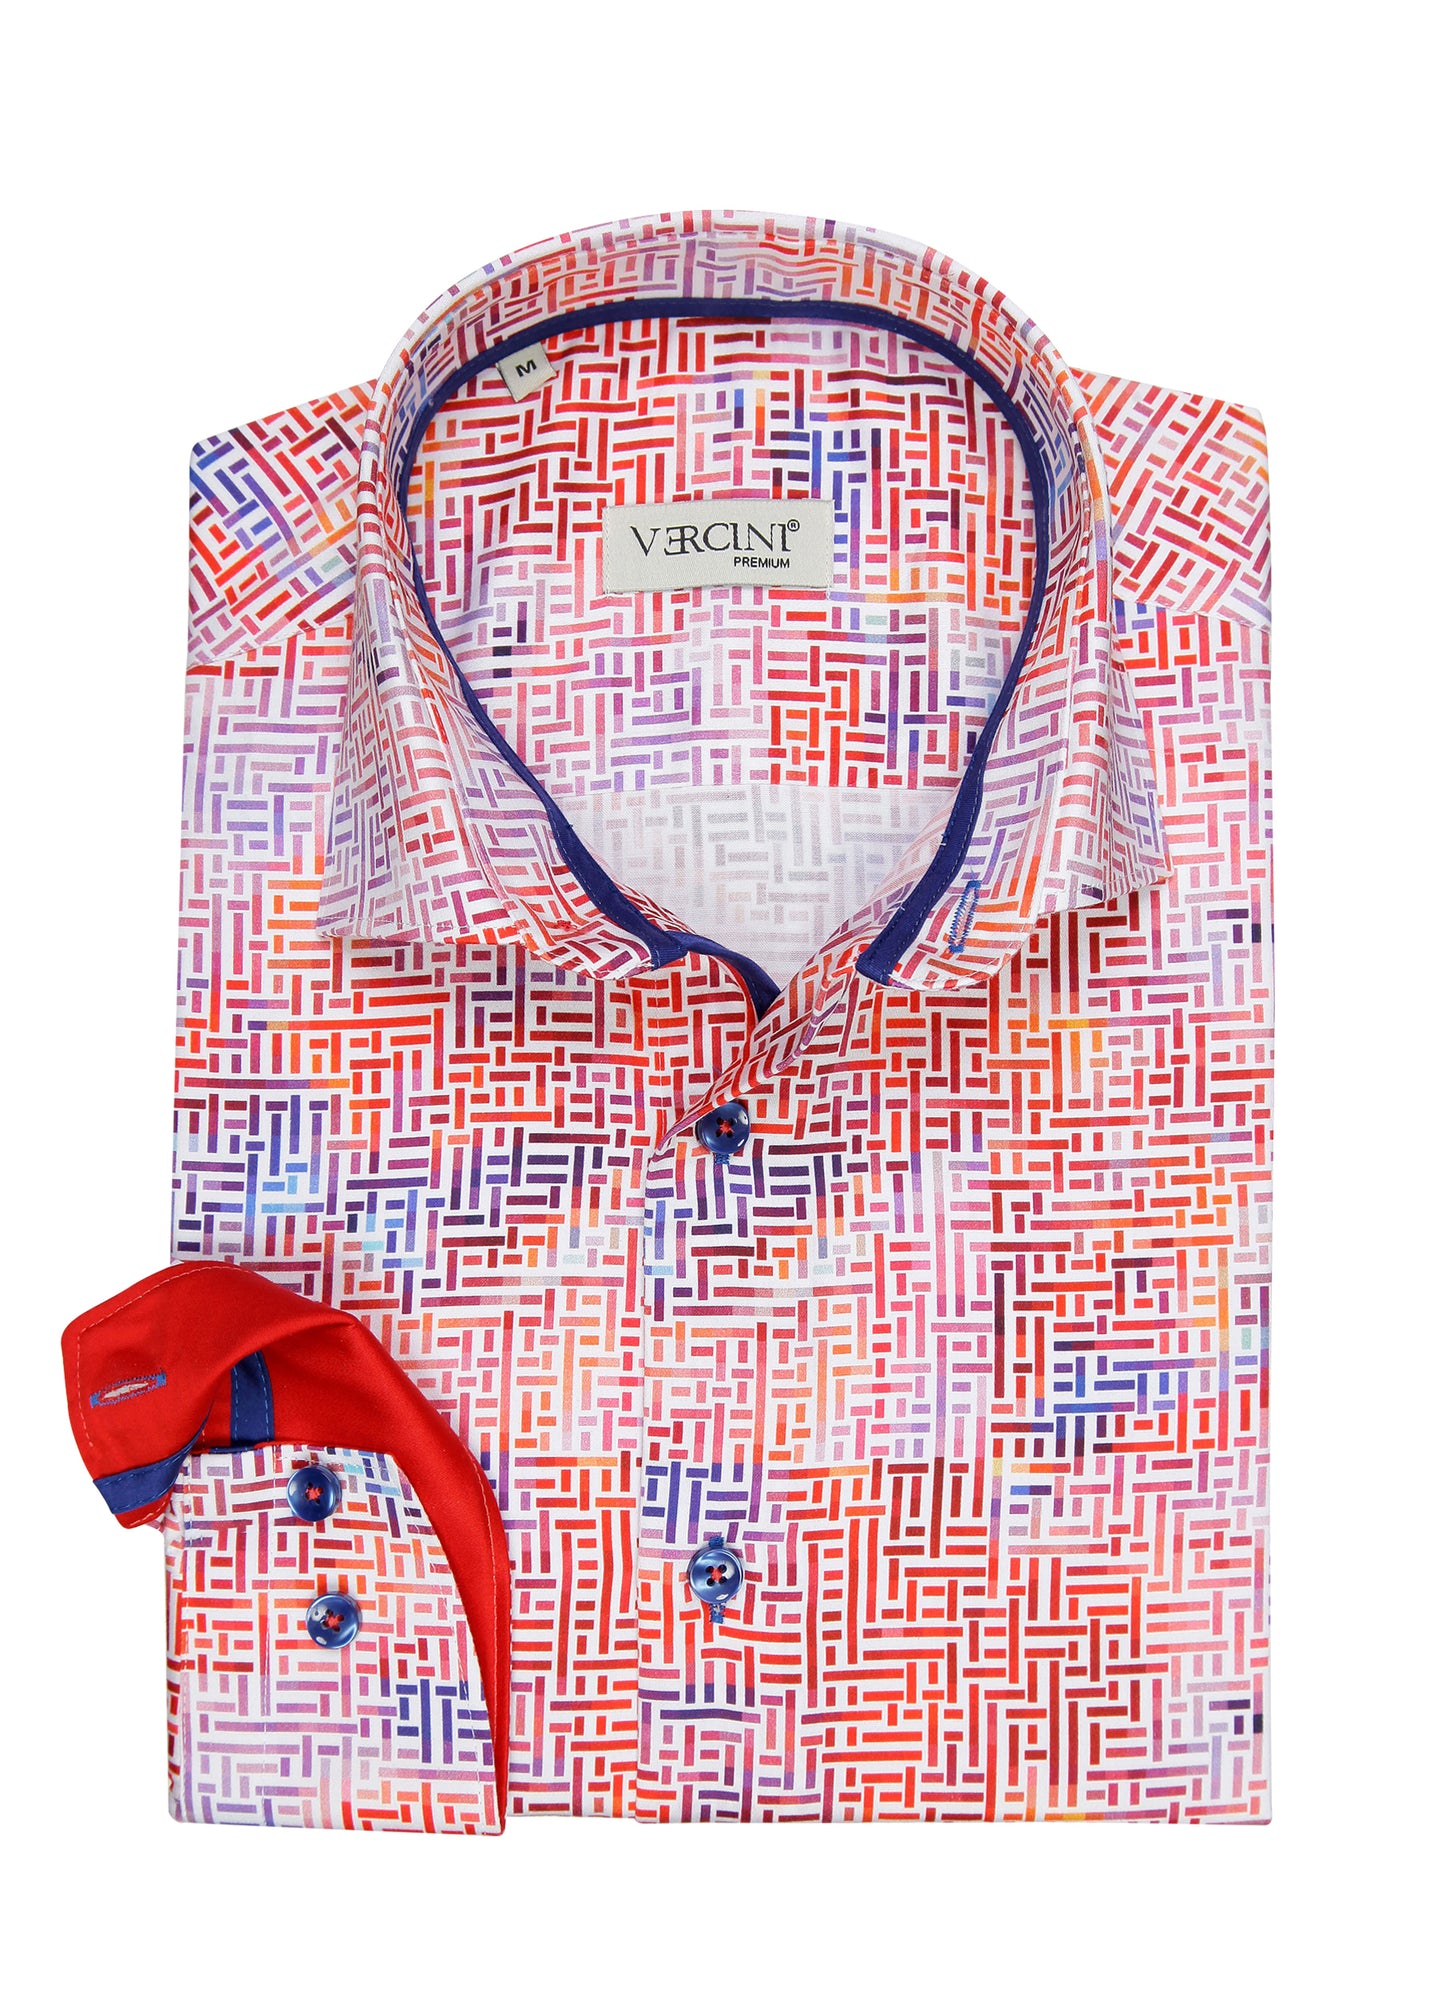 Vercini tetris art premium shirt